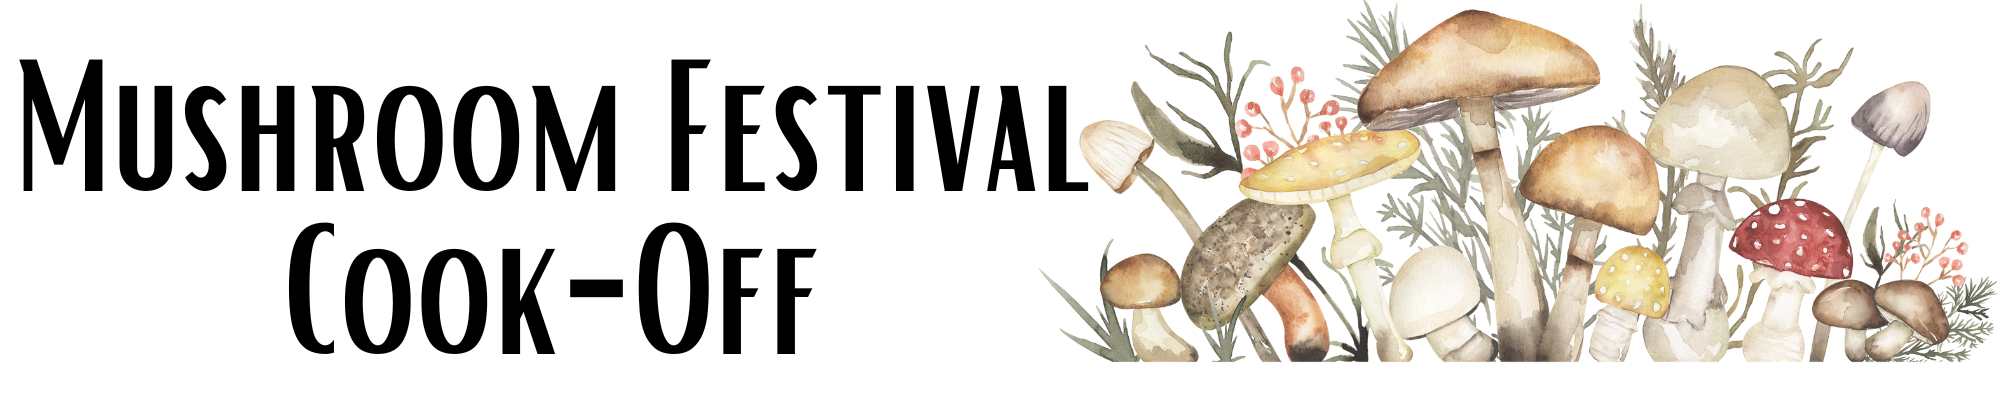 Mushroom Festival Cookoff Header with drawings of mushrooms